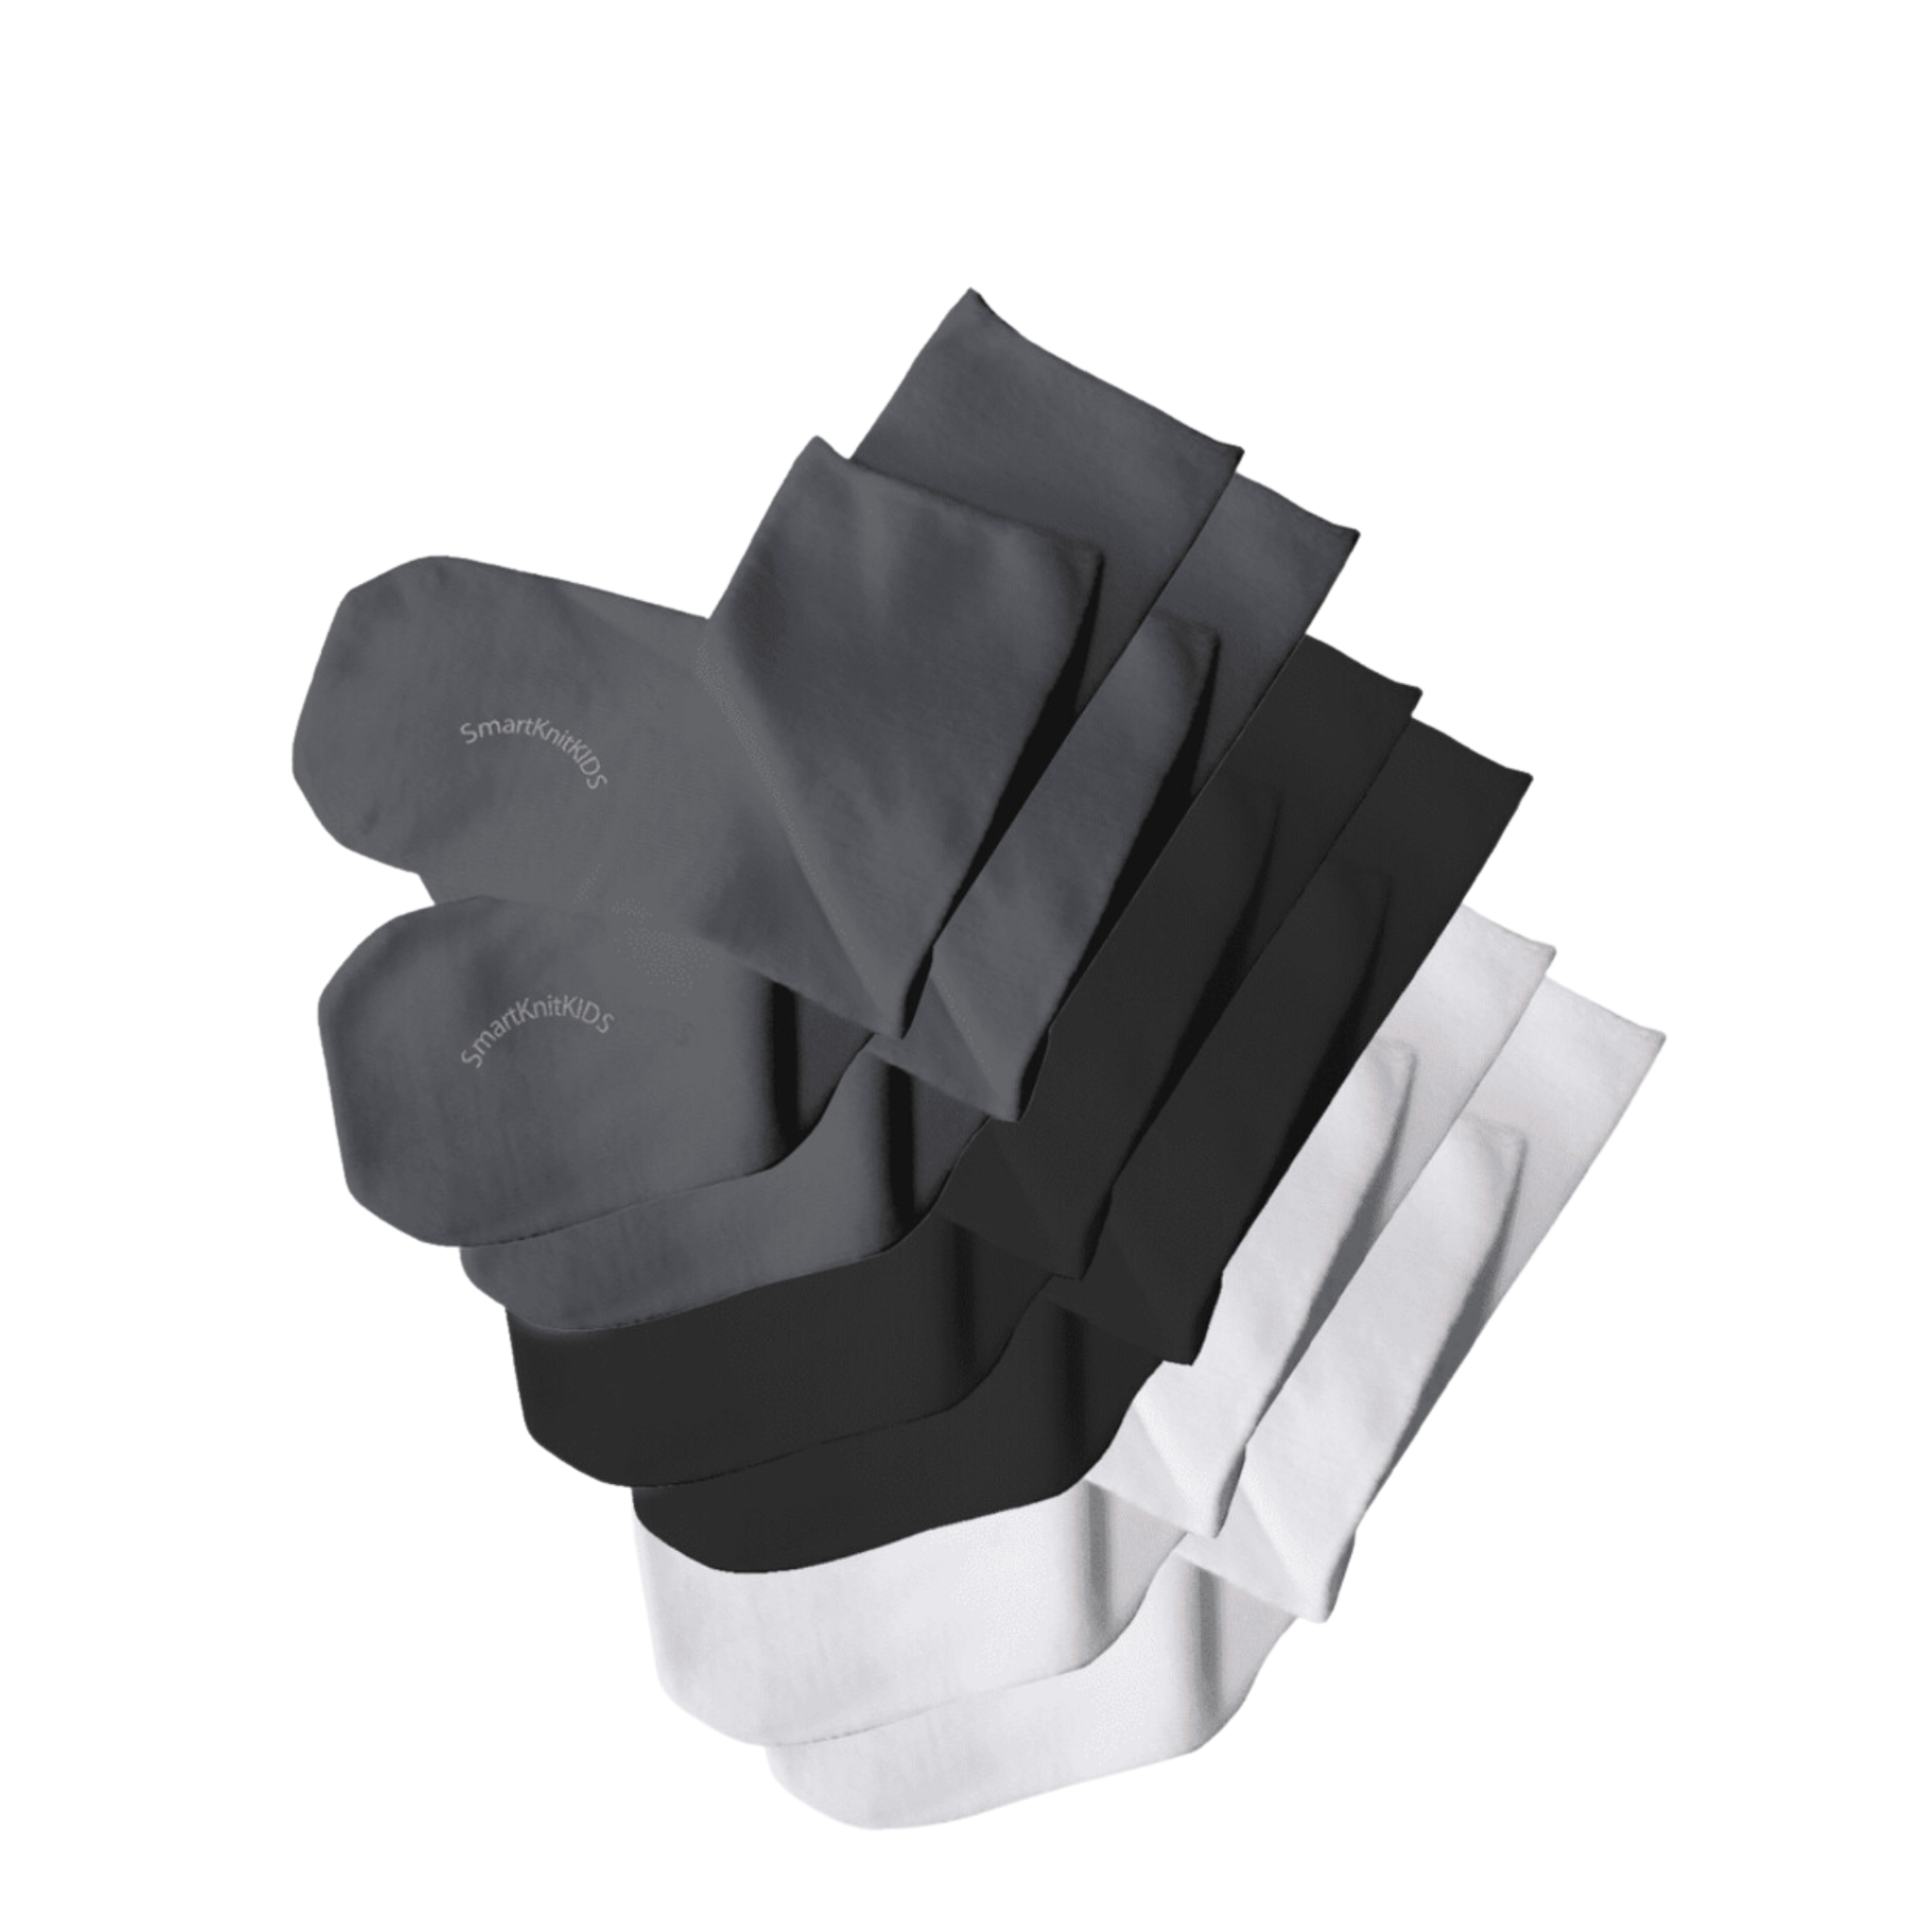 SmartKnitKIDS - Absolutely Seamless Socks - Ultimate comfort sock - Black/Grey/White - Value Packs